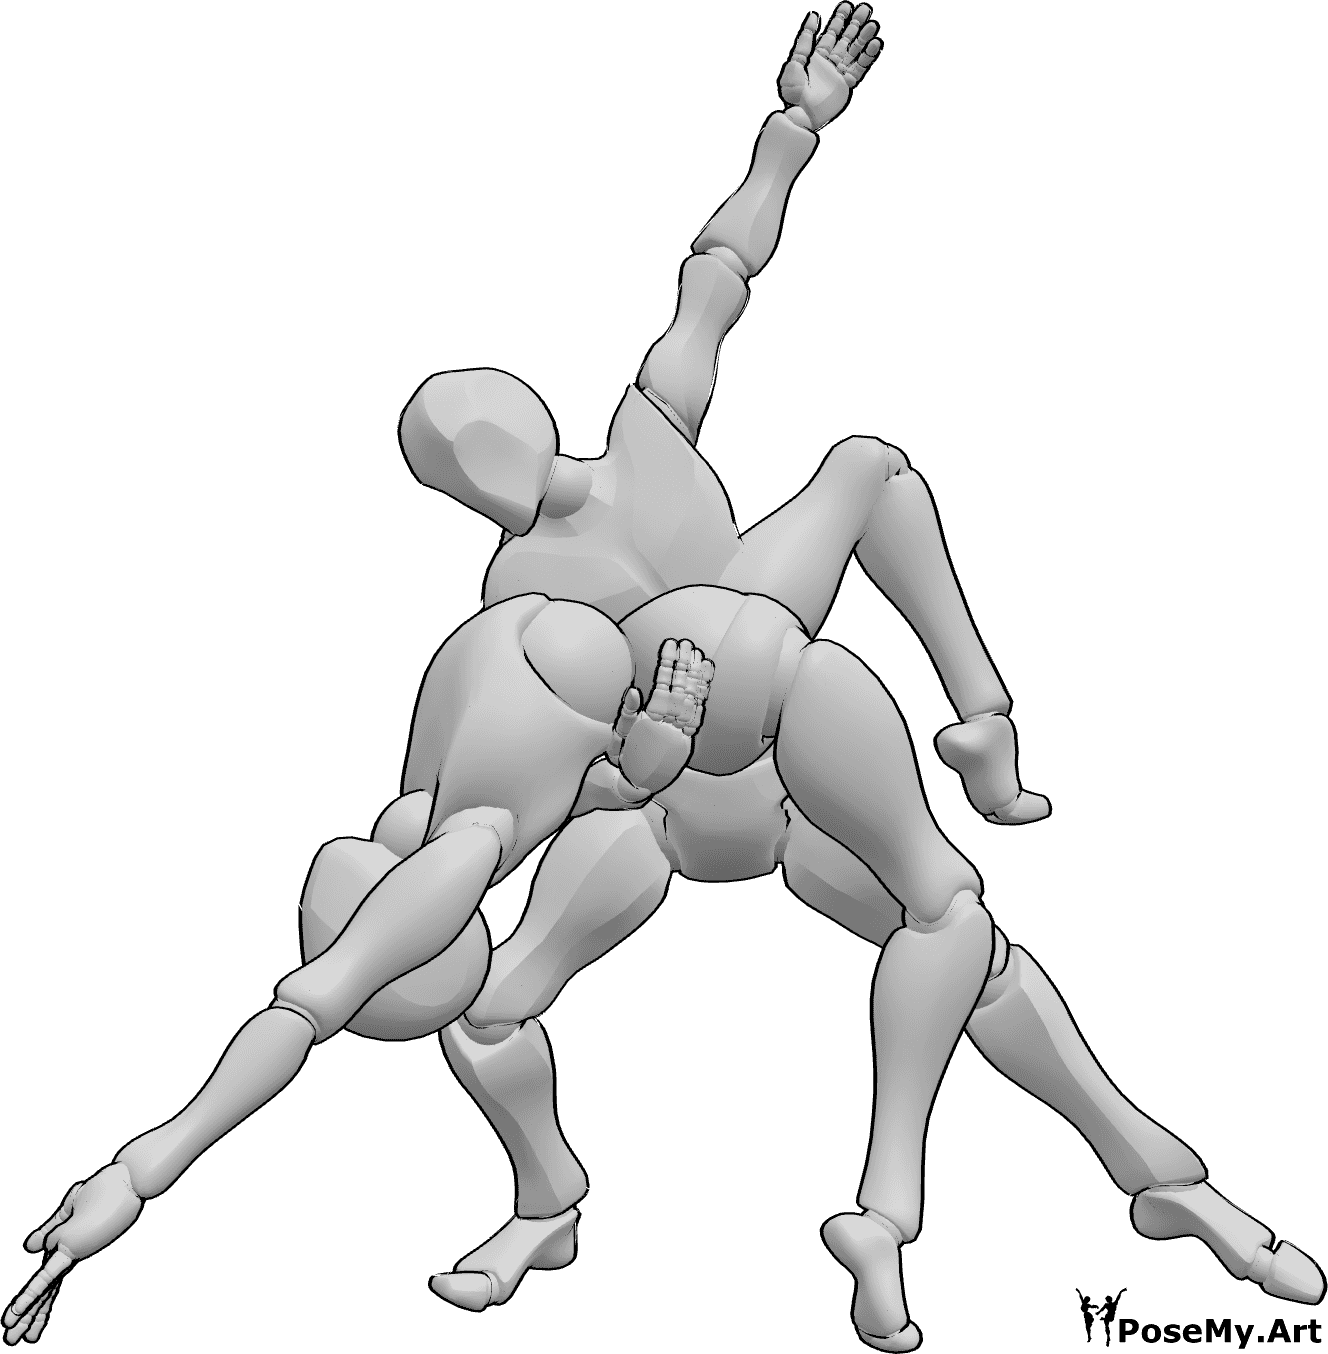 Pose Reference - Female male tango pose - Dynamic tango pose, male is holding the female with right hand